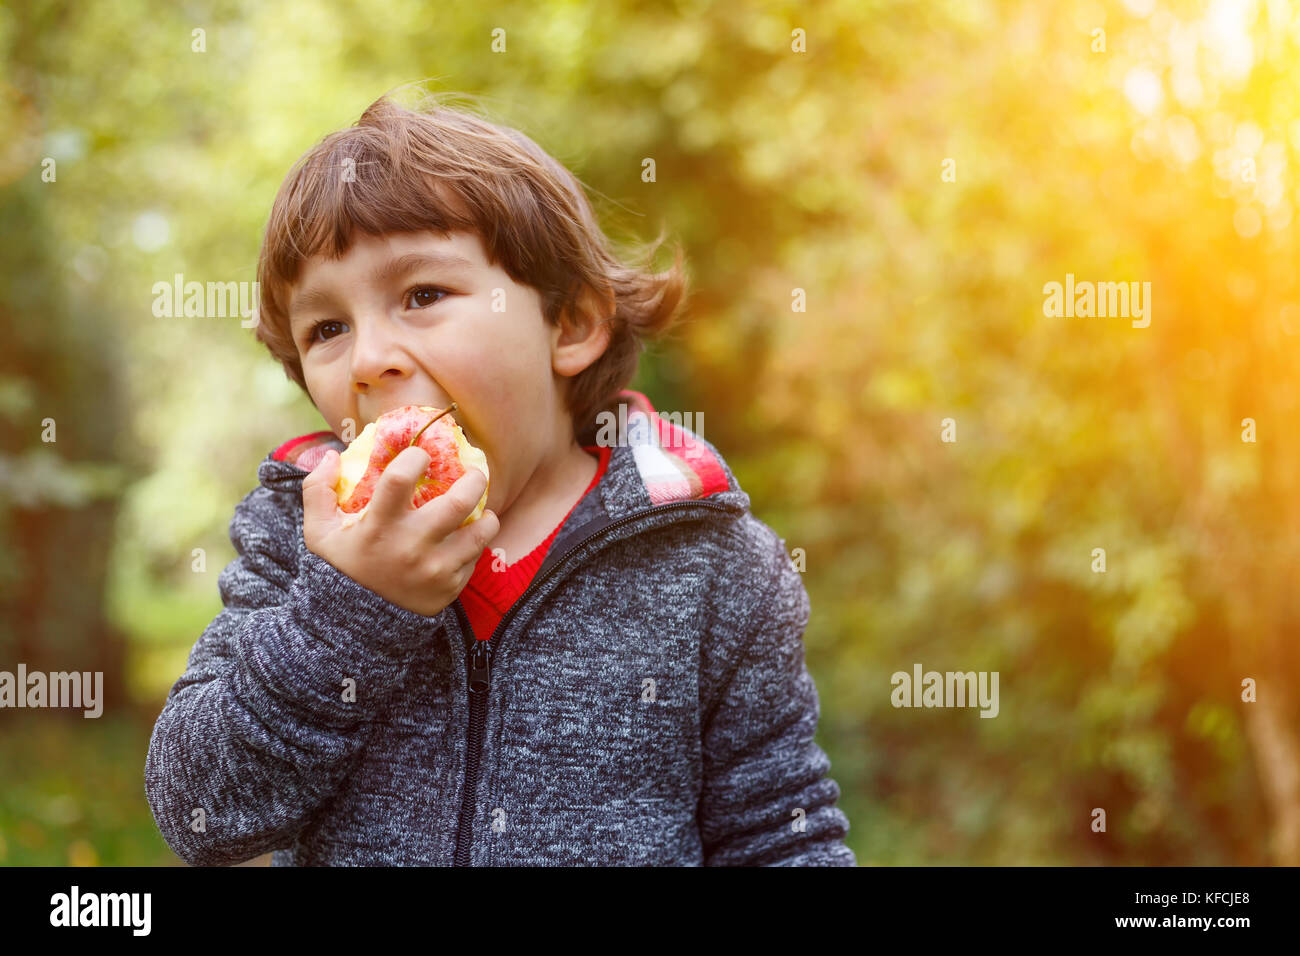 Little boy child kid eating apple fruit autumn fall copyspace nature outdoors Stock Photo